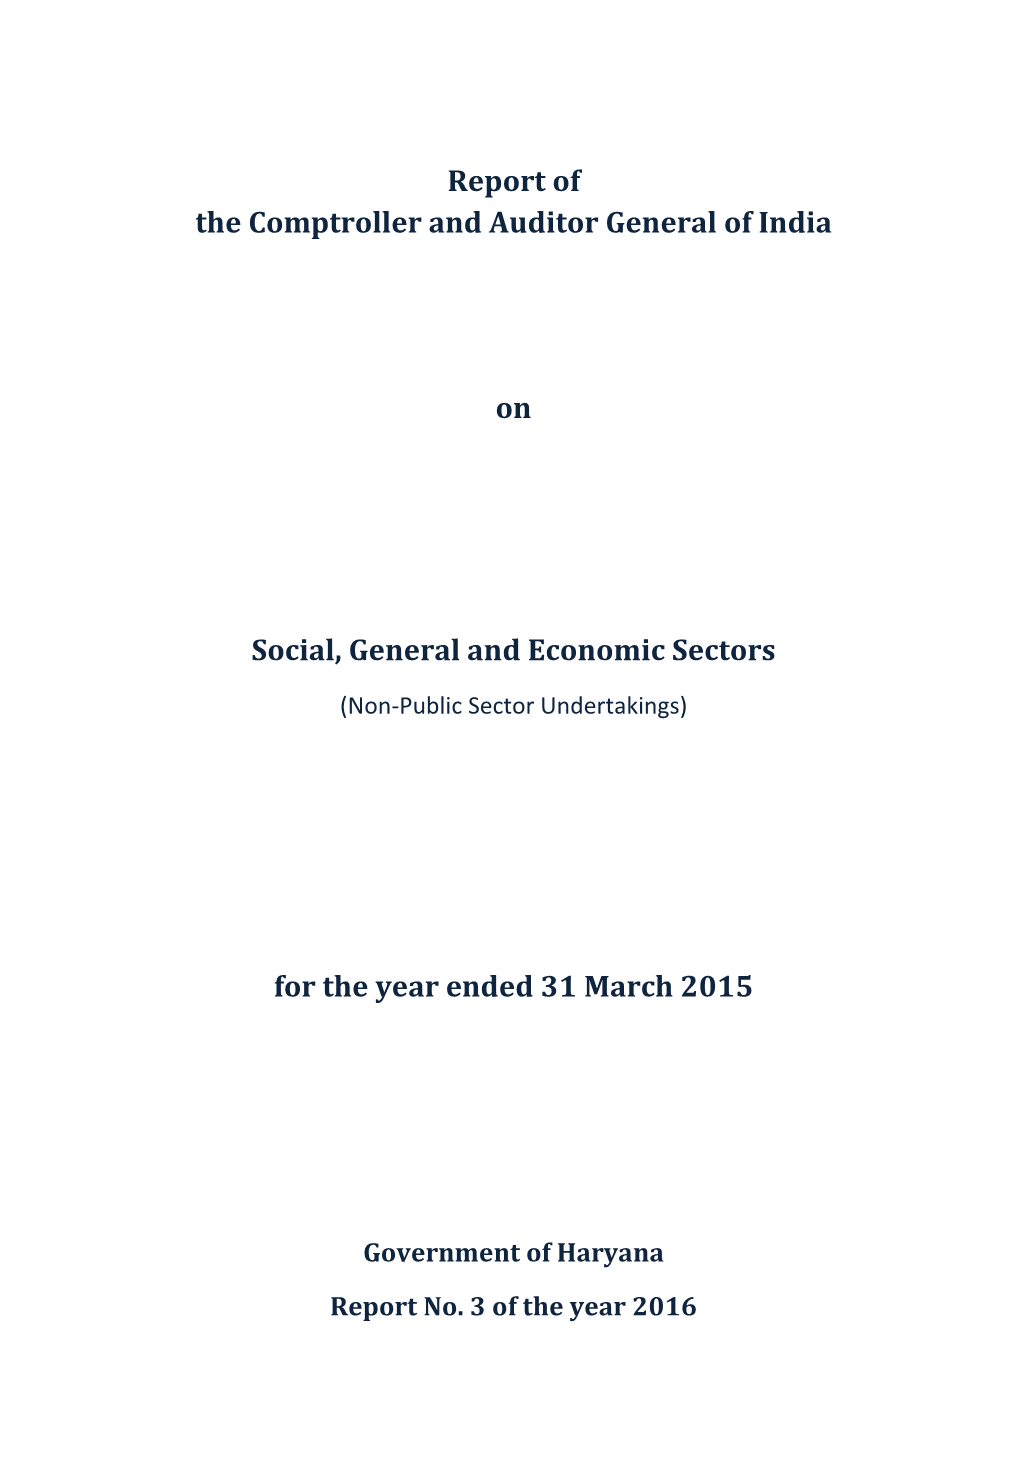 Social General and Economic Sectors Non-PSU Government Of